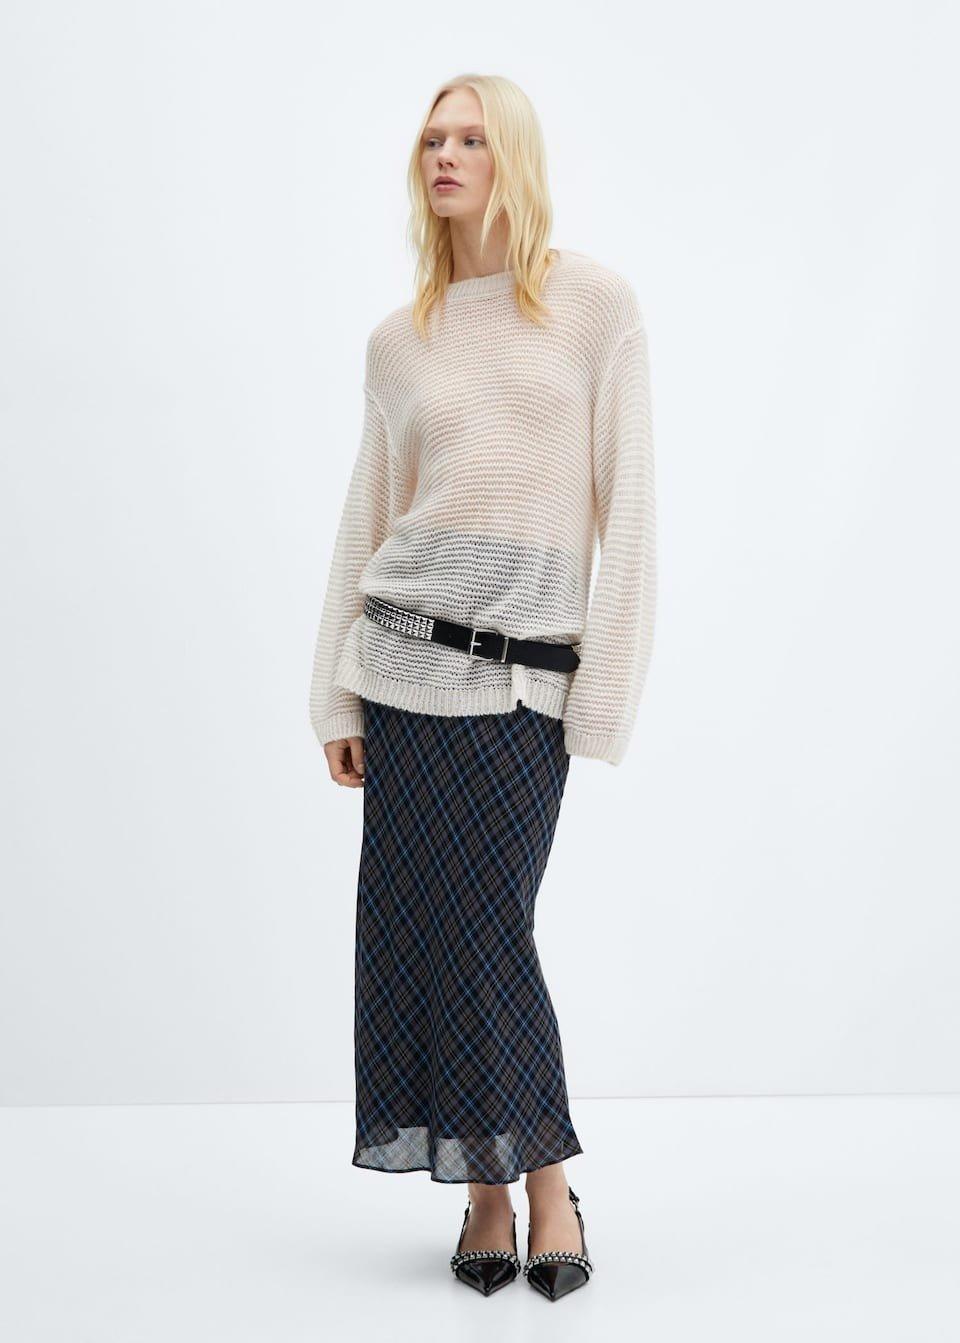 Mango - White Semi-Transparent Knitted Sweater